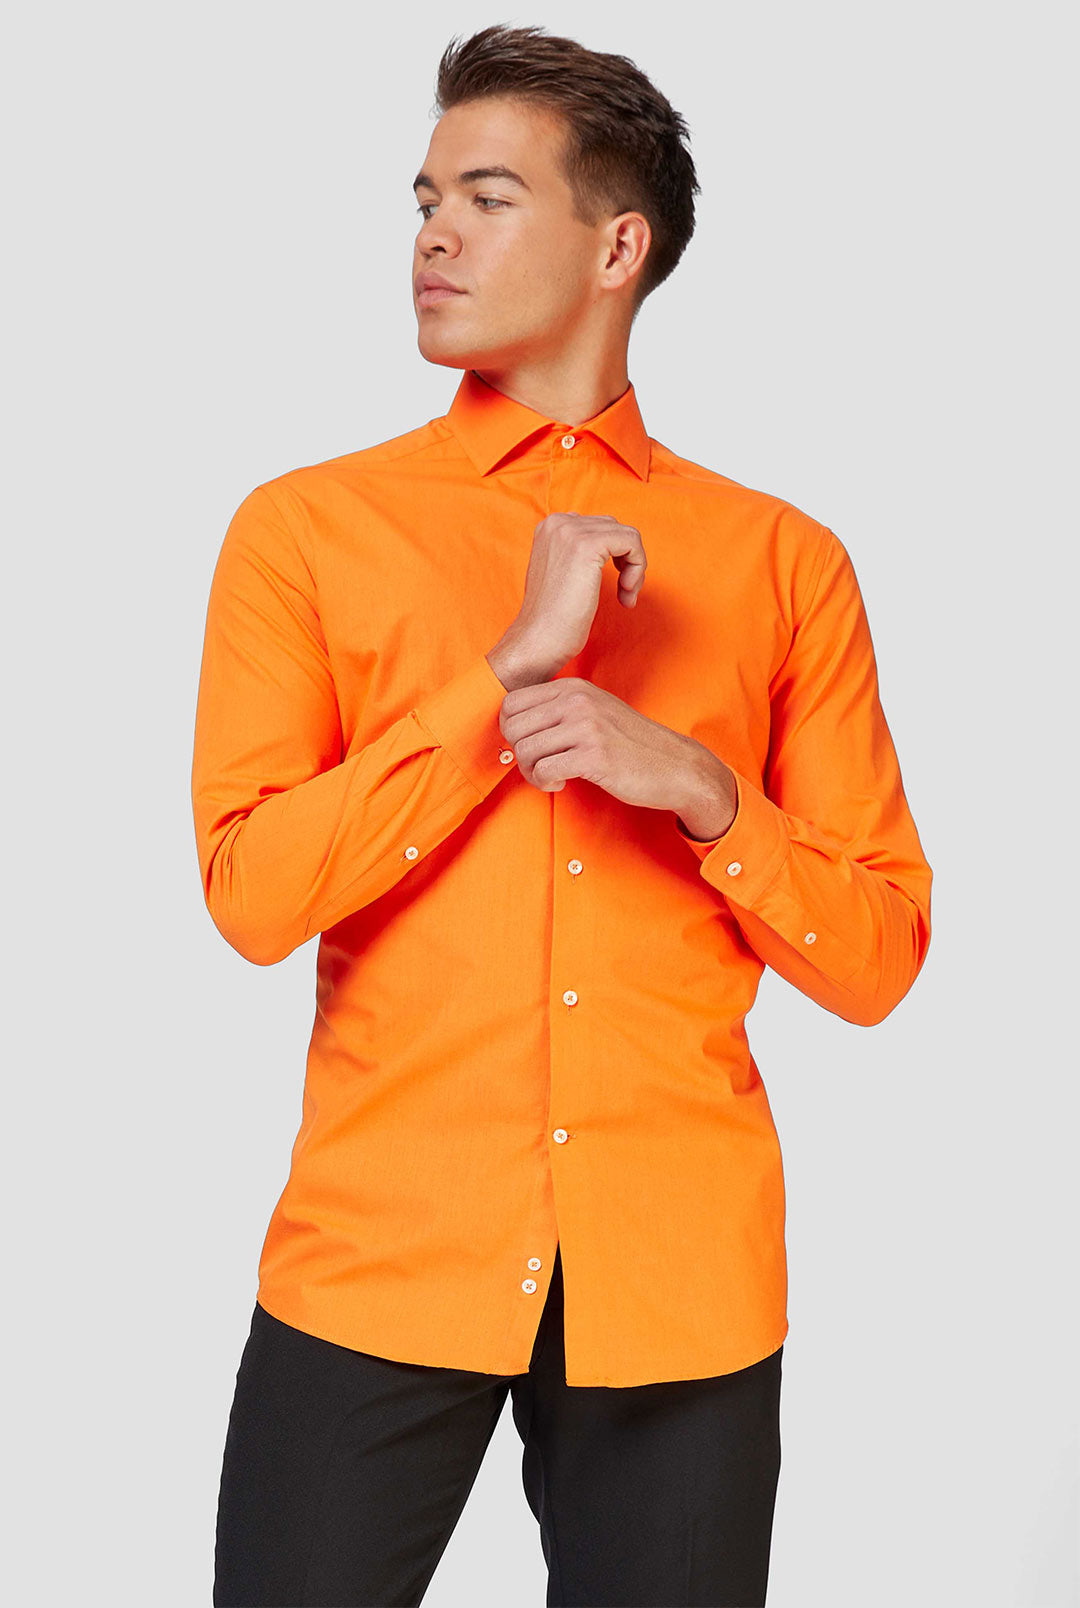 Orangefarbenes Business Hemd | Herrenhemd OppoSuits 